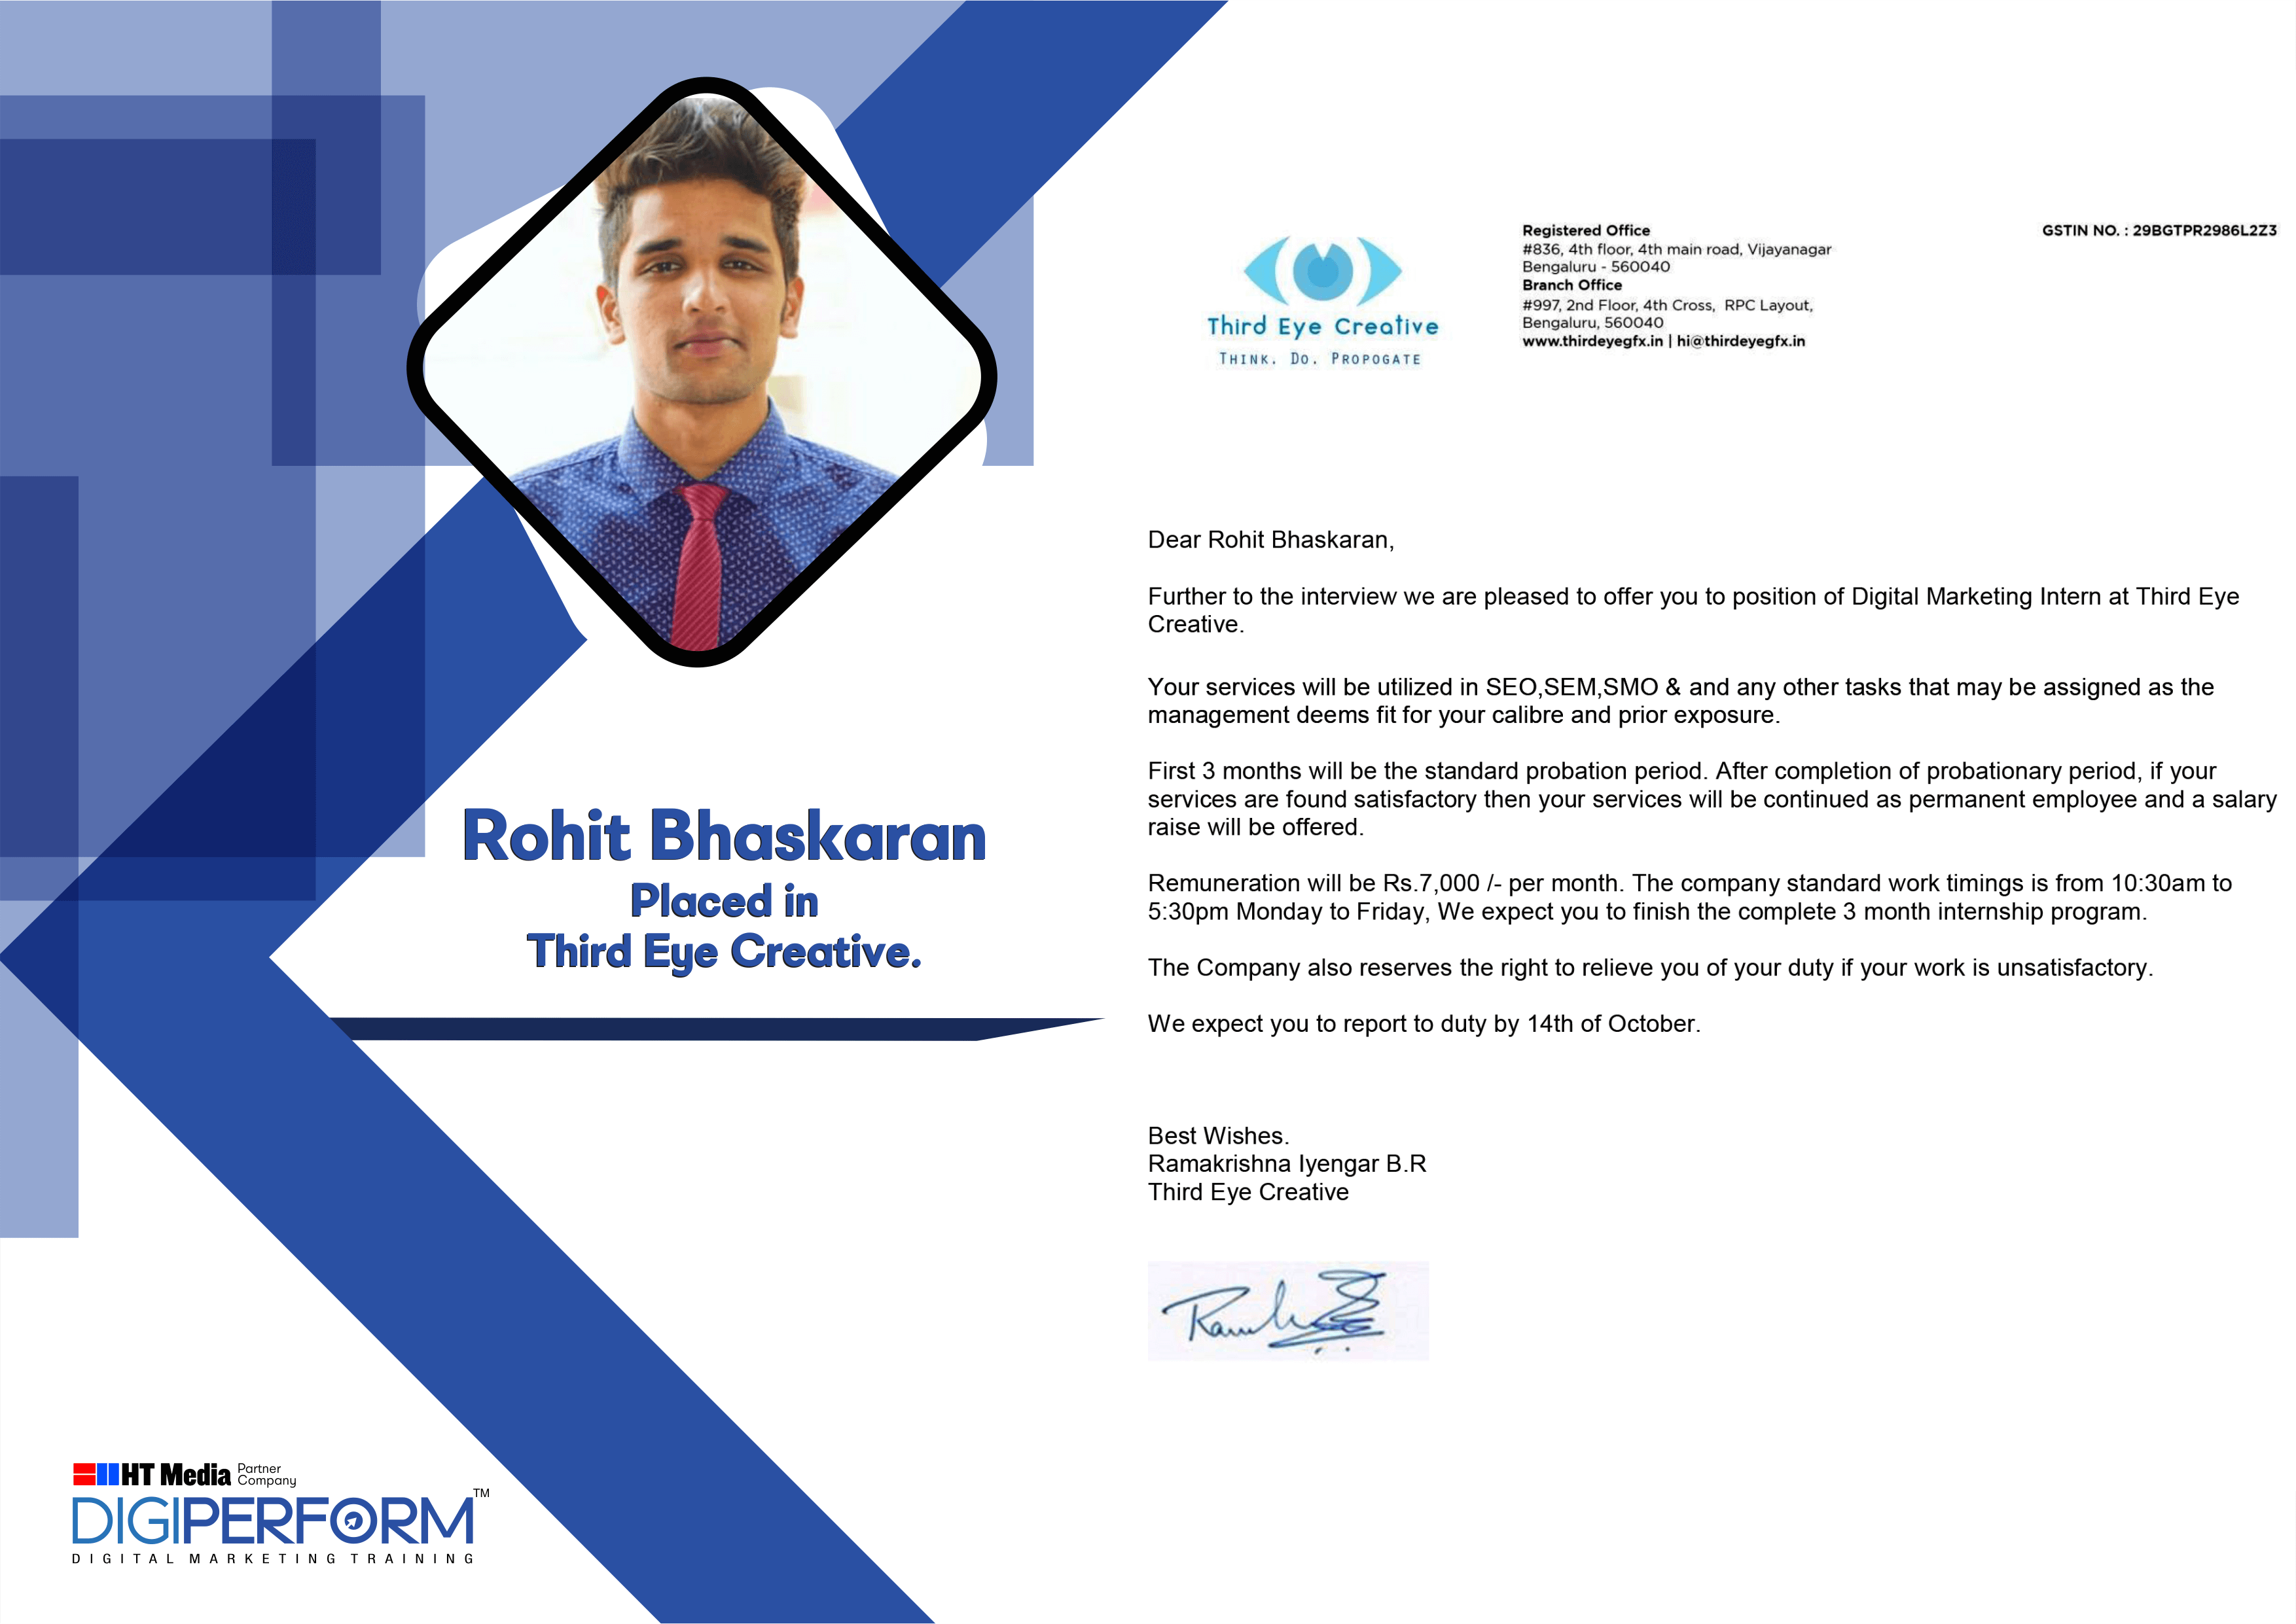 Digiperform Students - Rohit Bhaskaran placed in Third Eye Creative